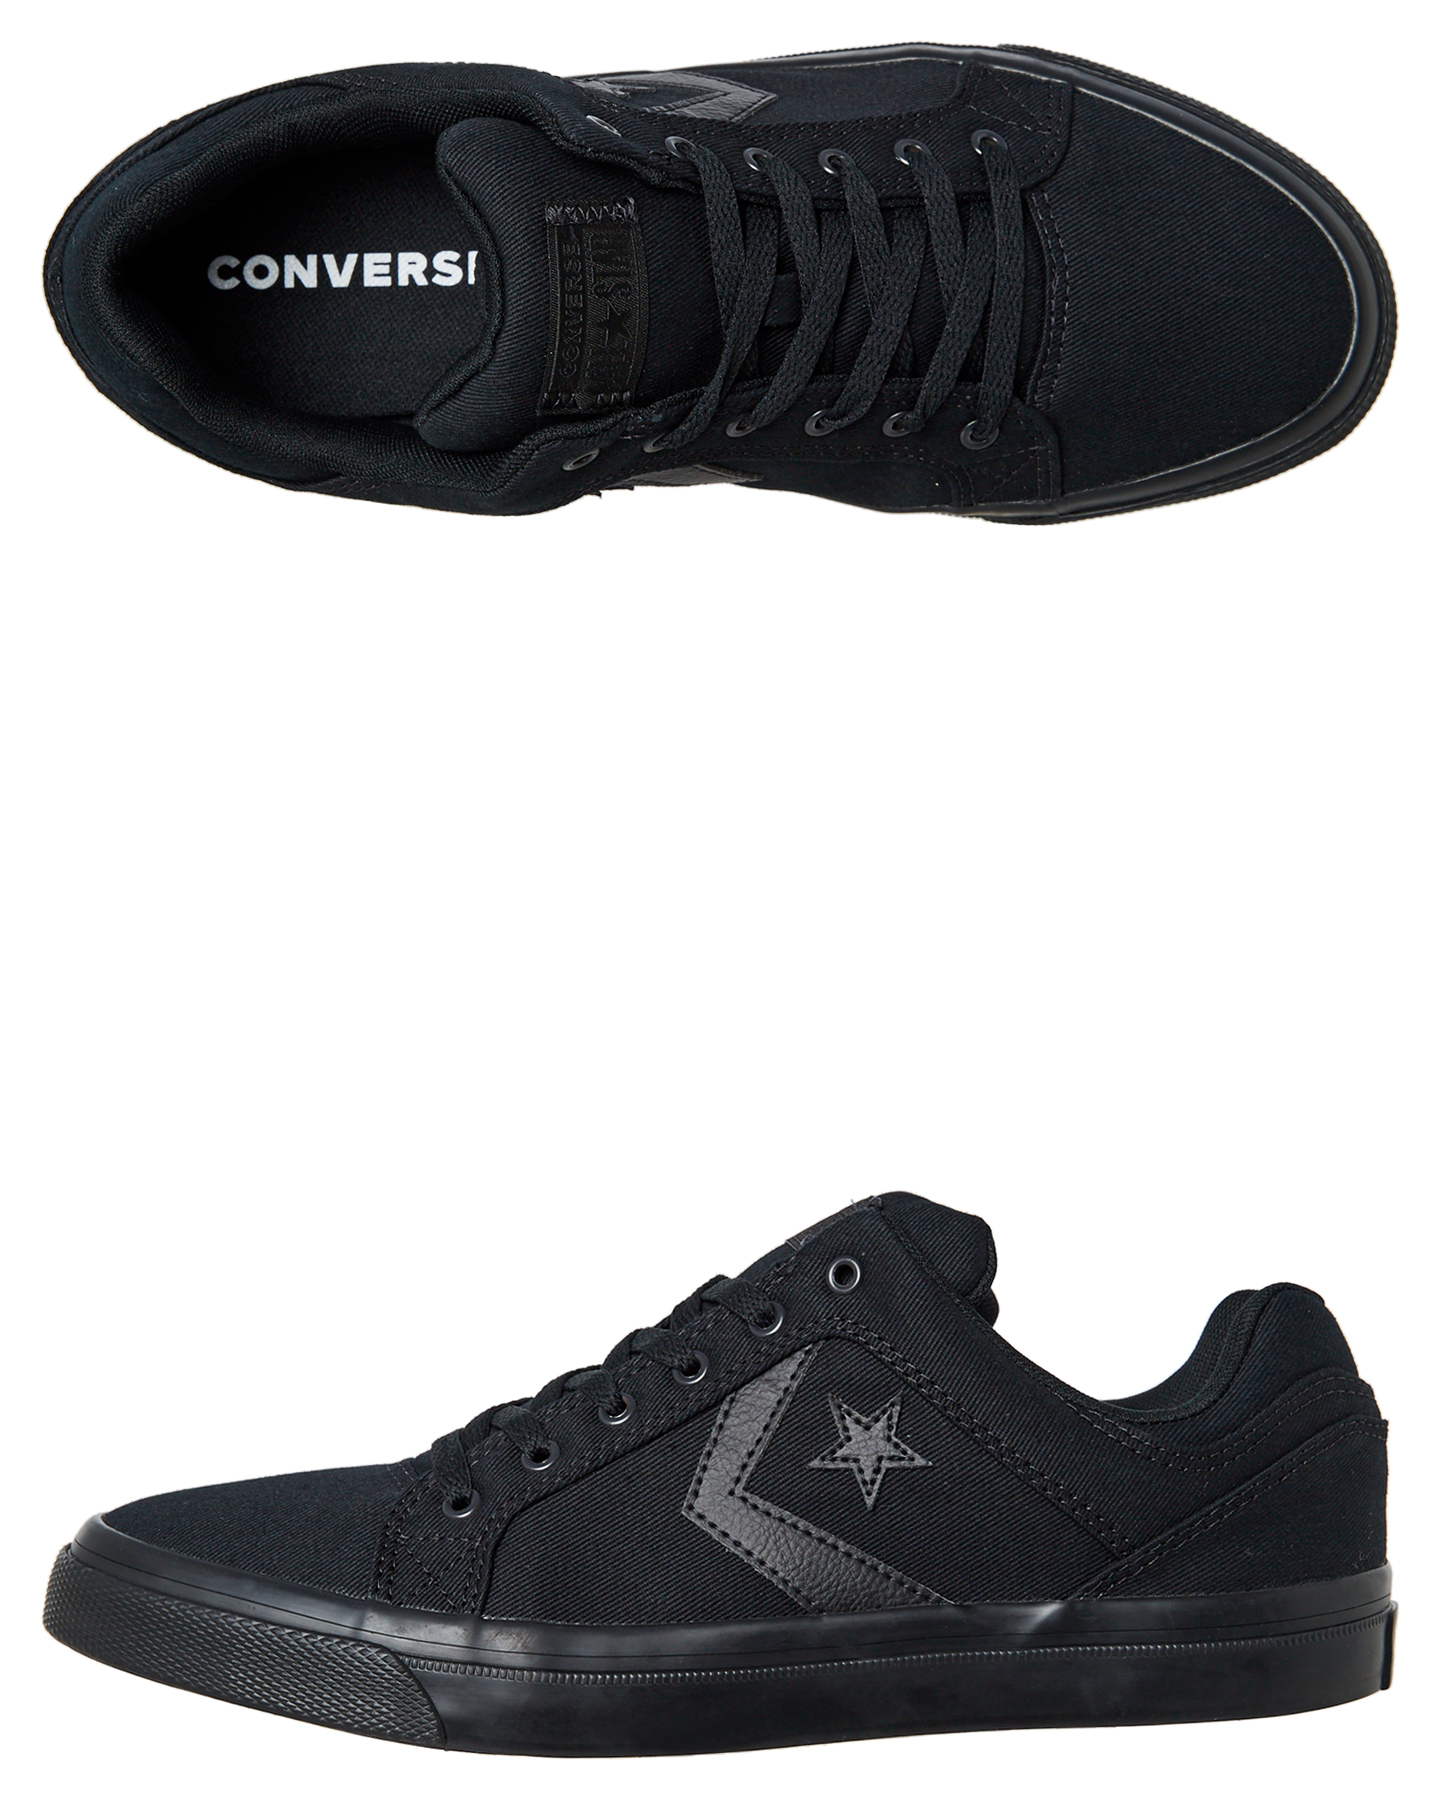 converse sneakers sale online